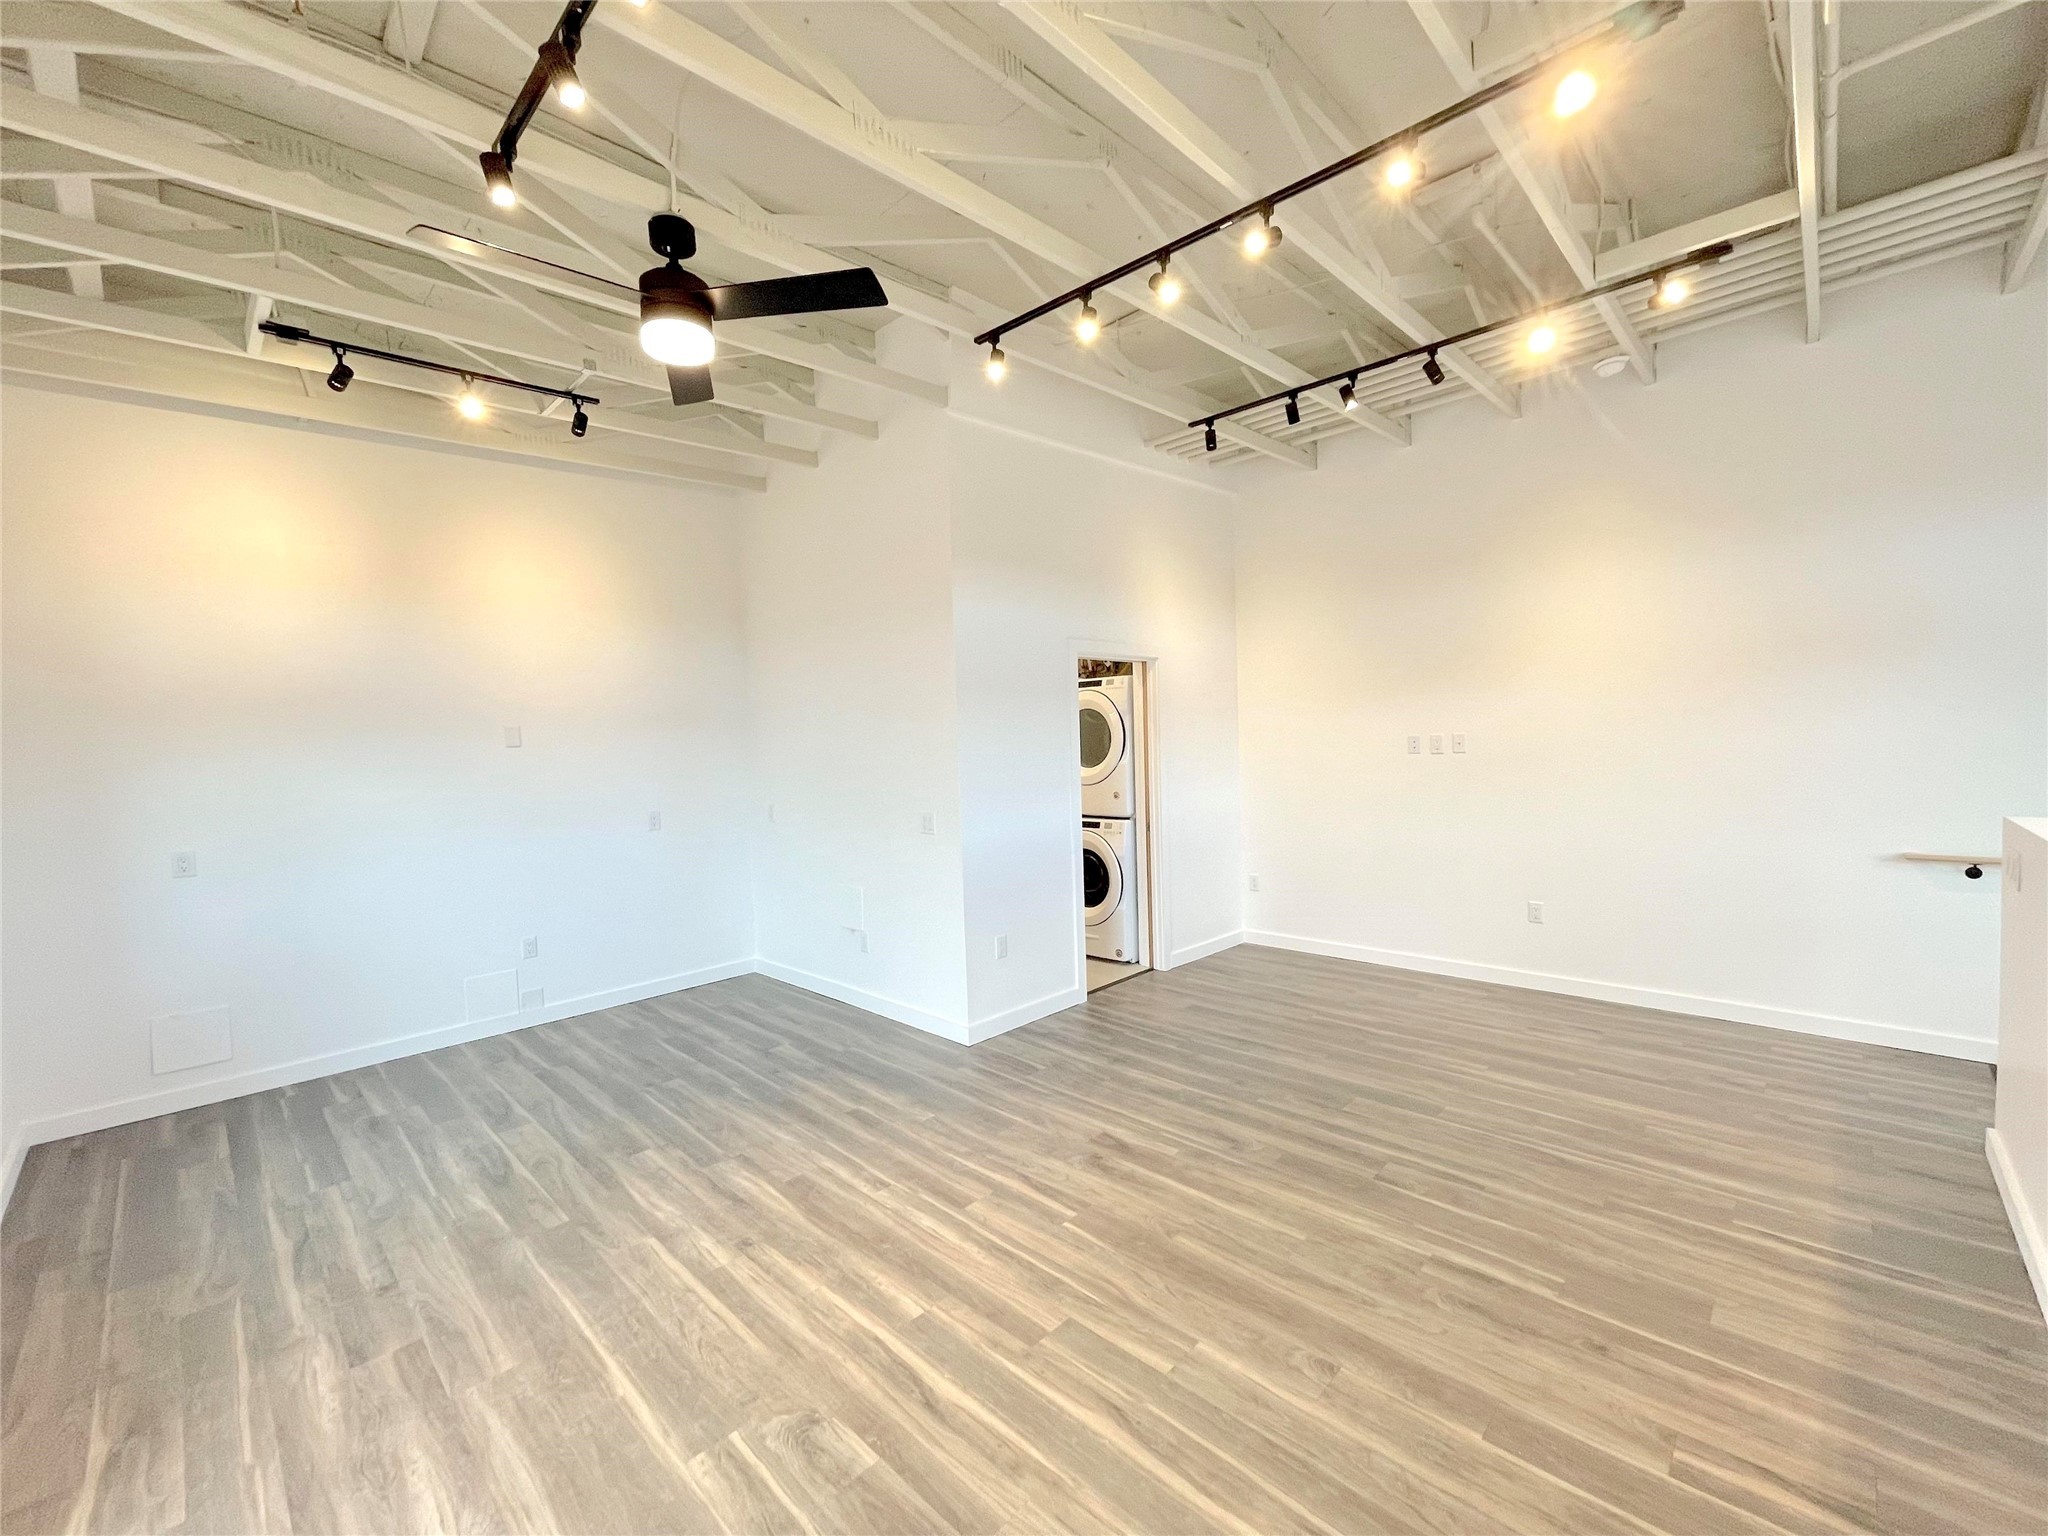 Second Level - Open Studio Space